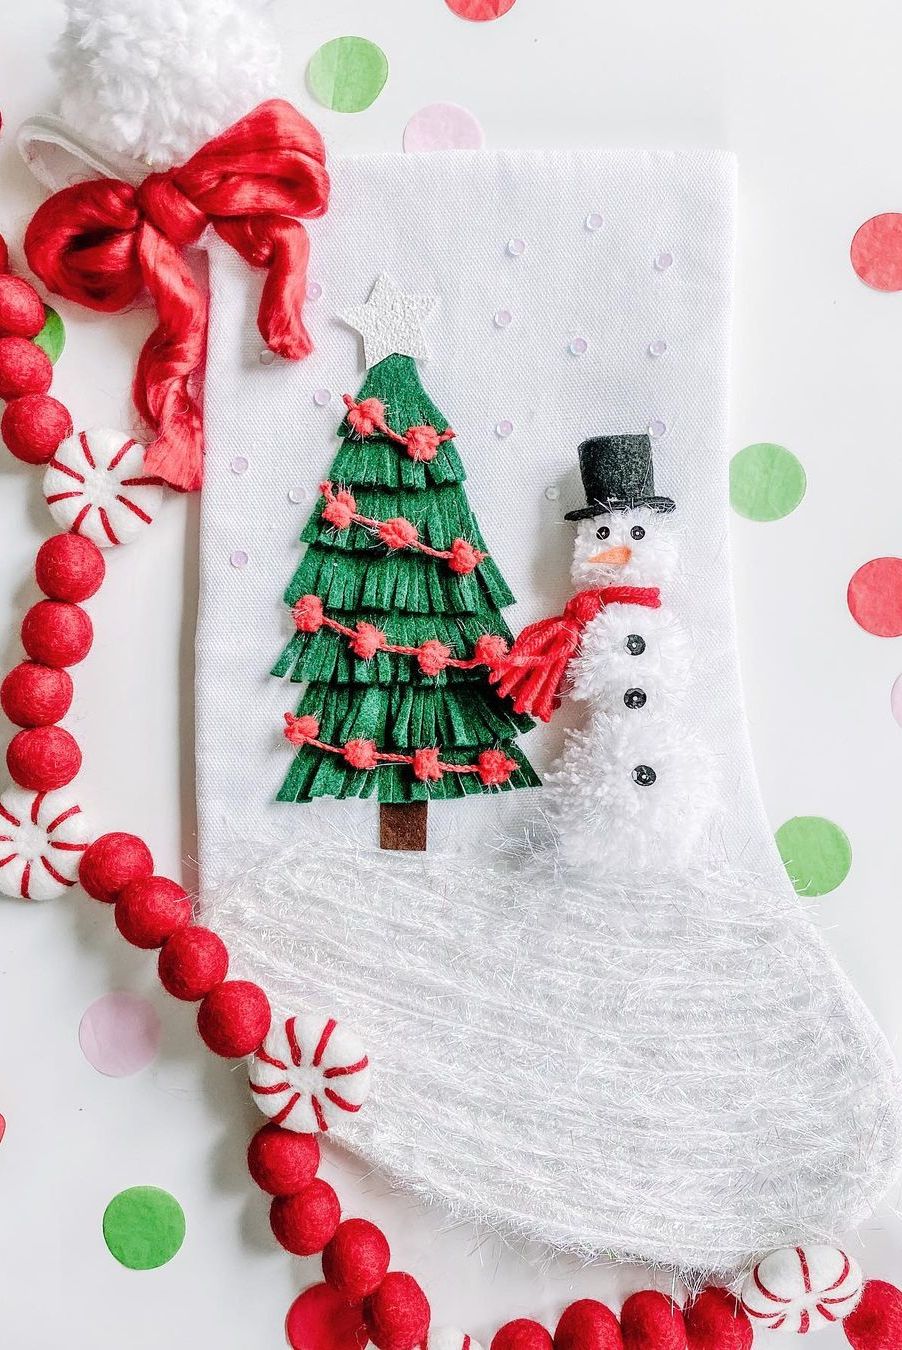 stocking decorating ideas snowman stocking